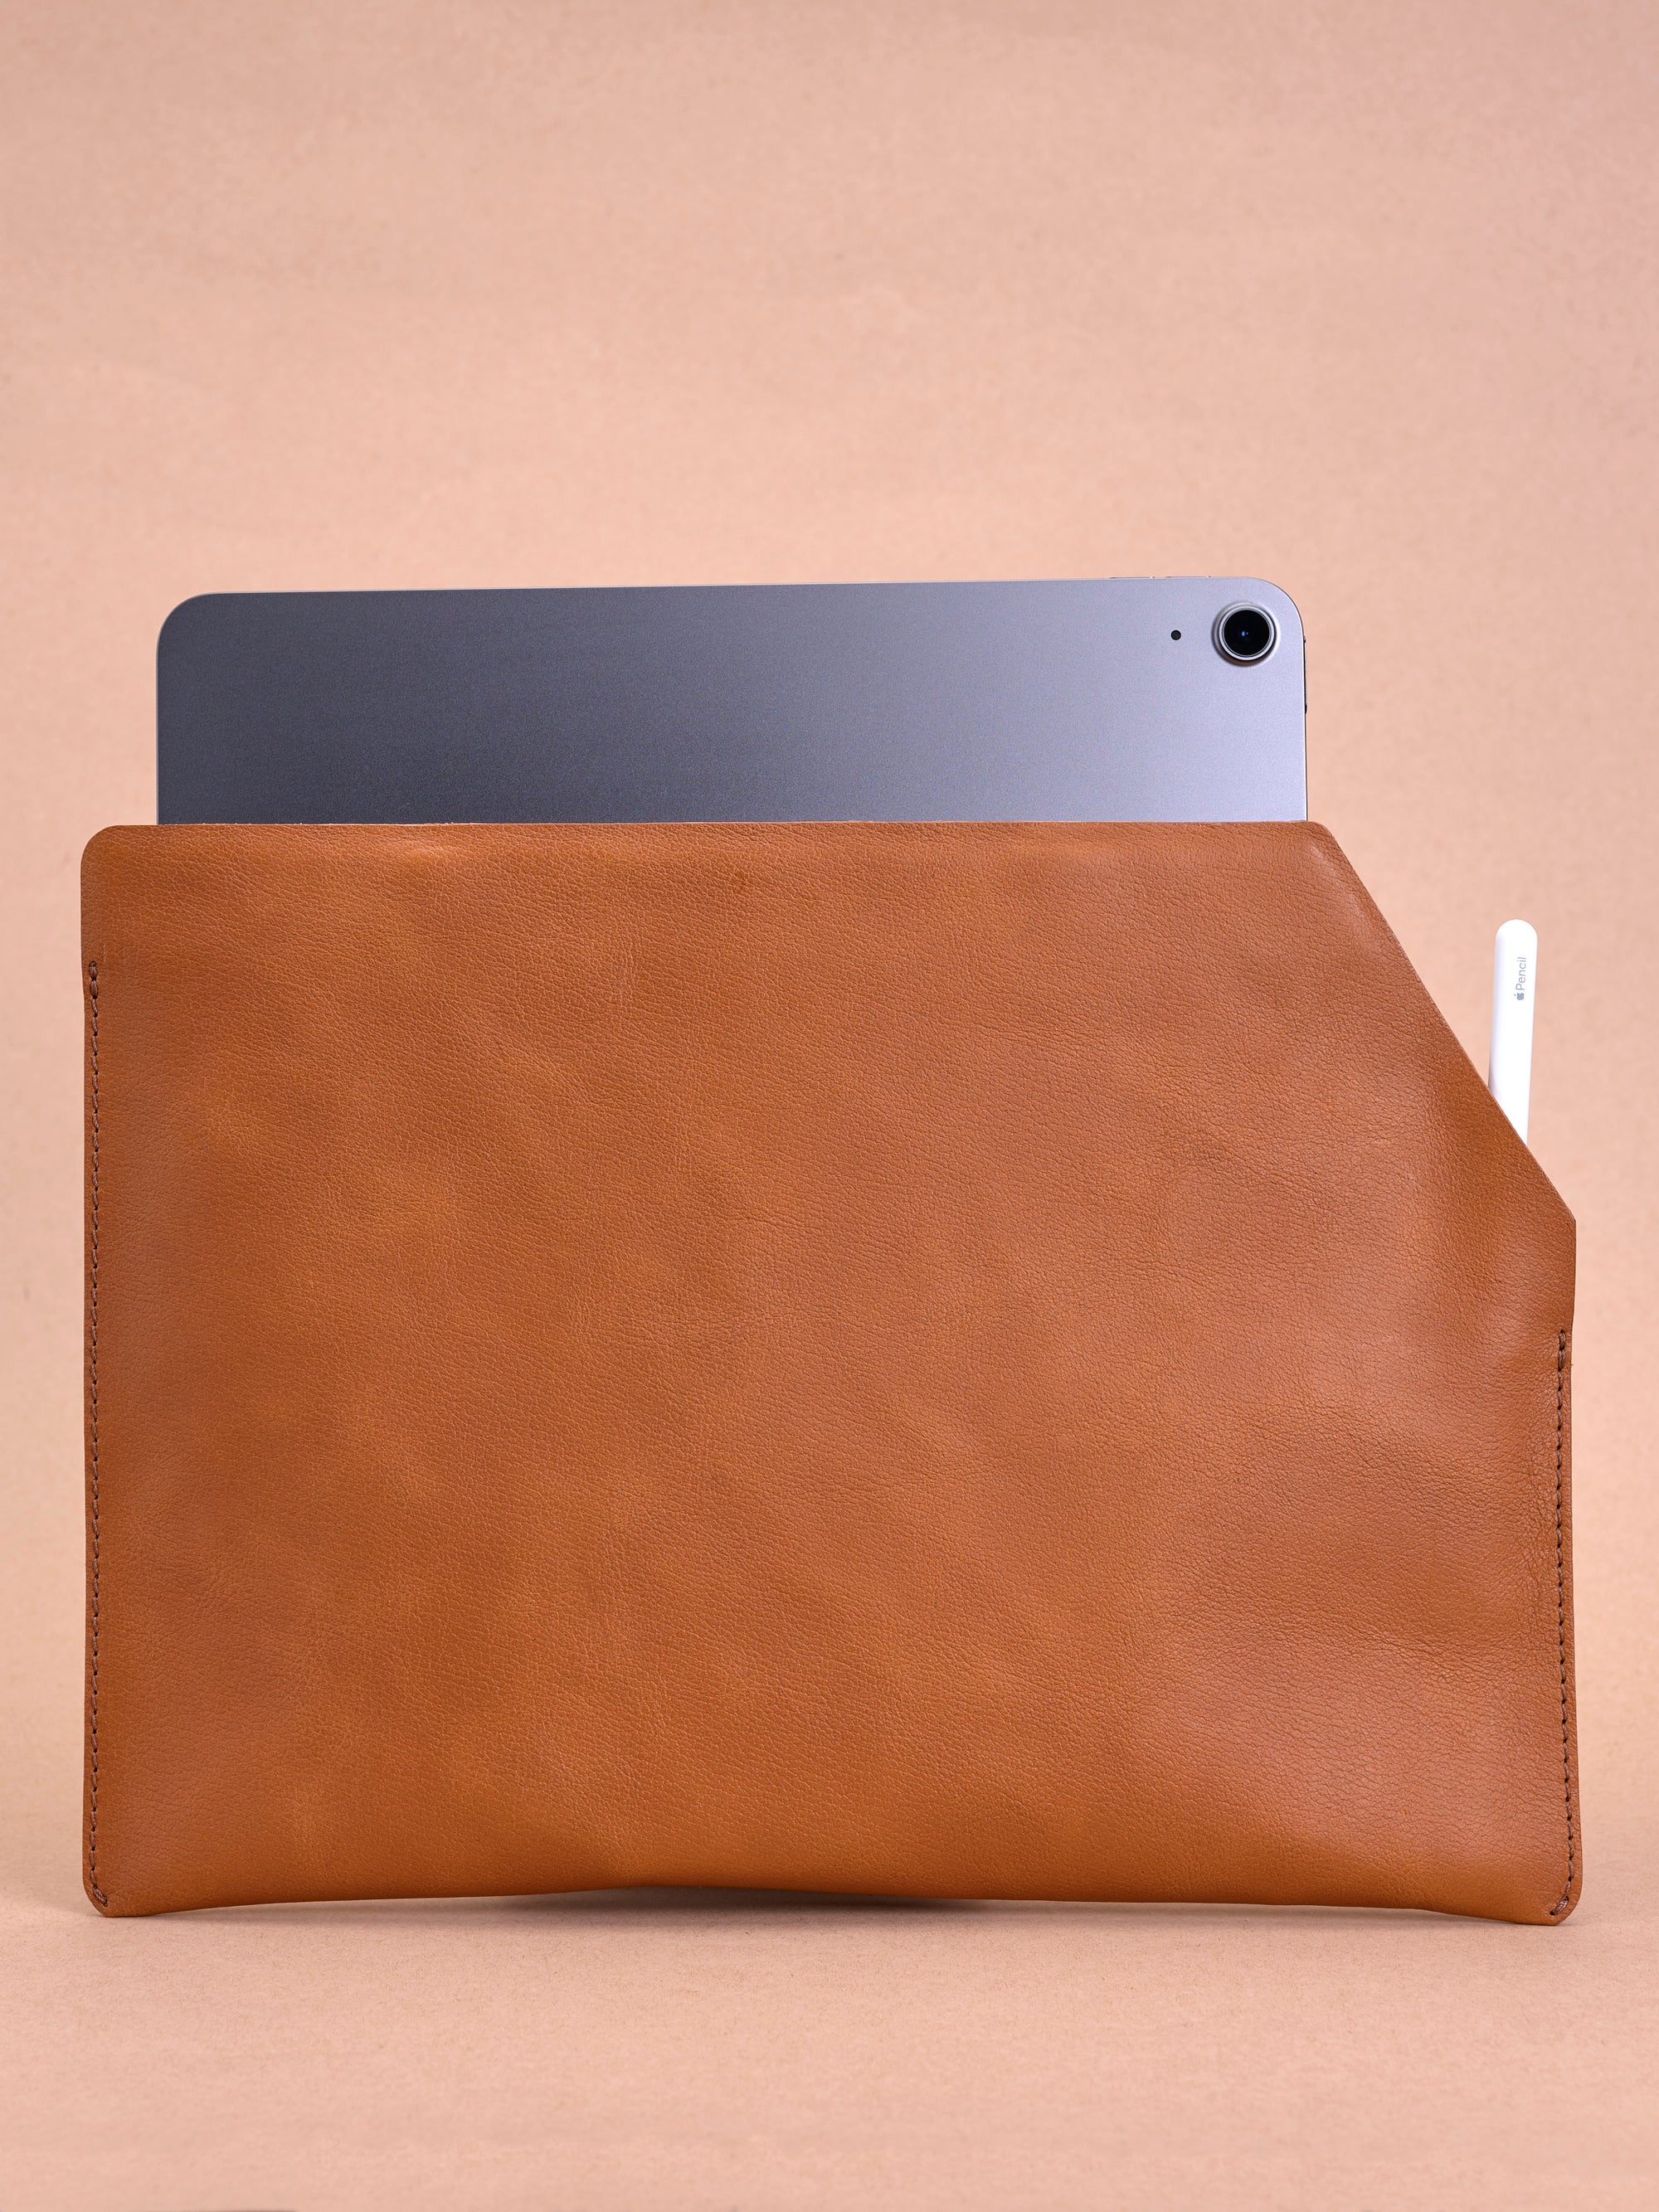 Full grain leather. Draftsman 7 iPad Sleeve Cover Tan, iPad Pro 11-inch, iPad Pro 12.9-inch, M1 Chip by Capra Leather